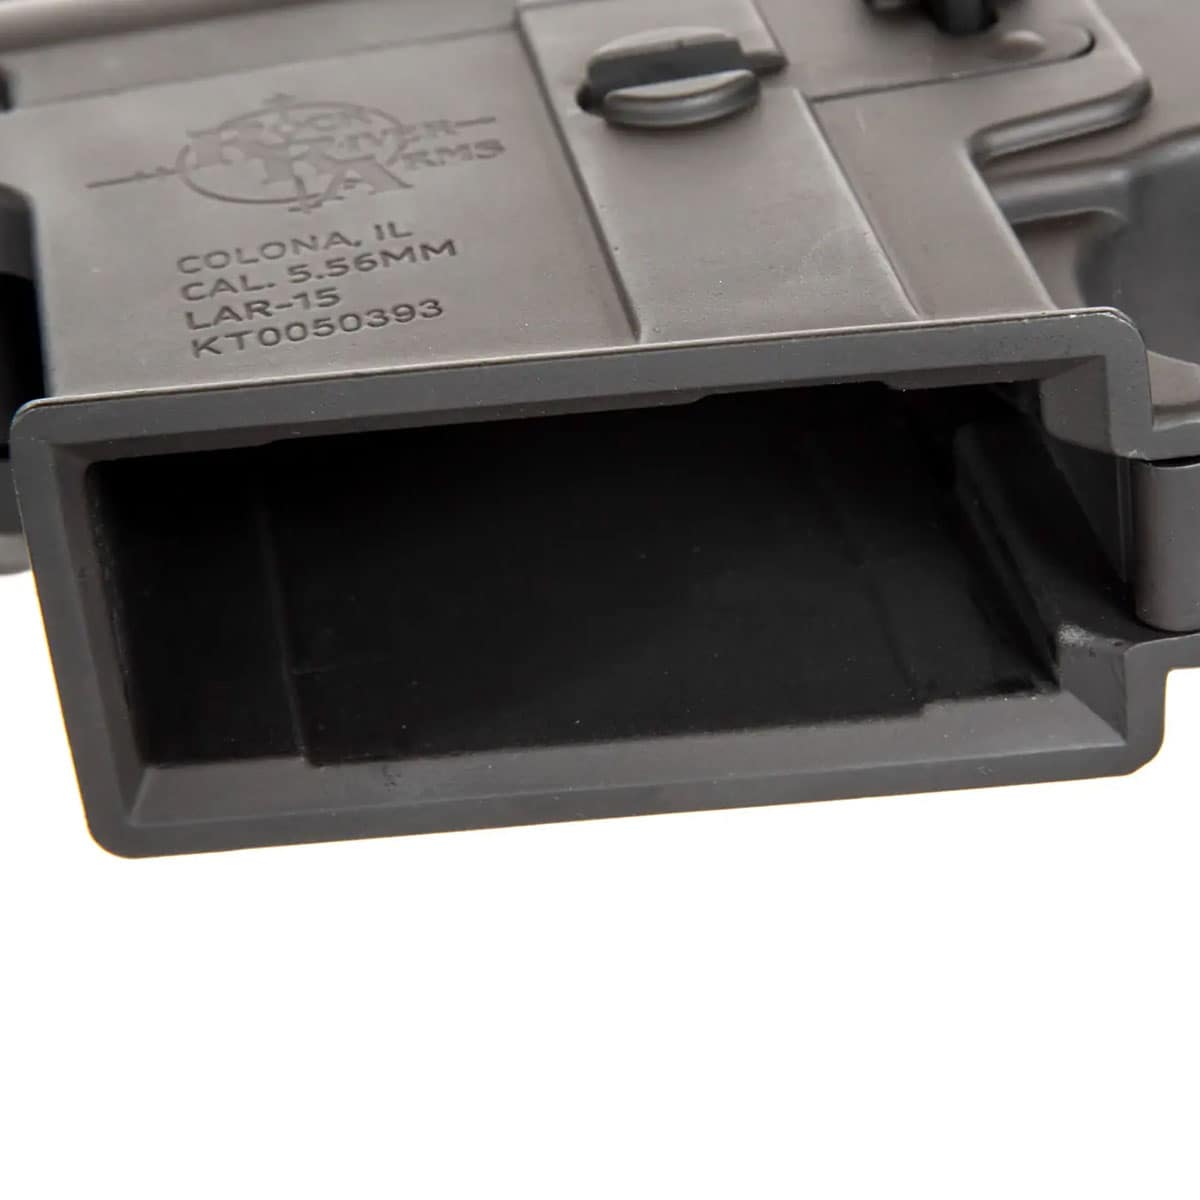 Штурмова гвинтівка AEG Specna Arms RRA SA-E05 Edge - Чорна